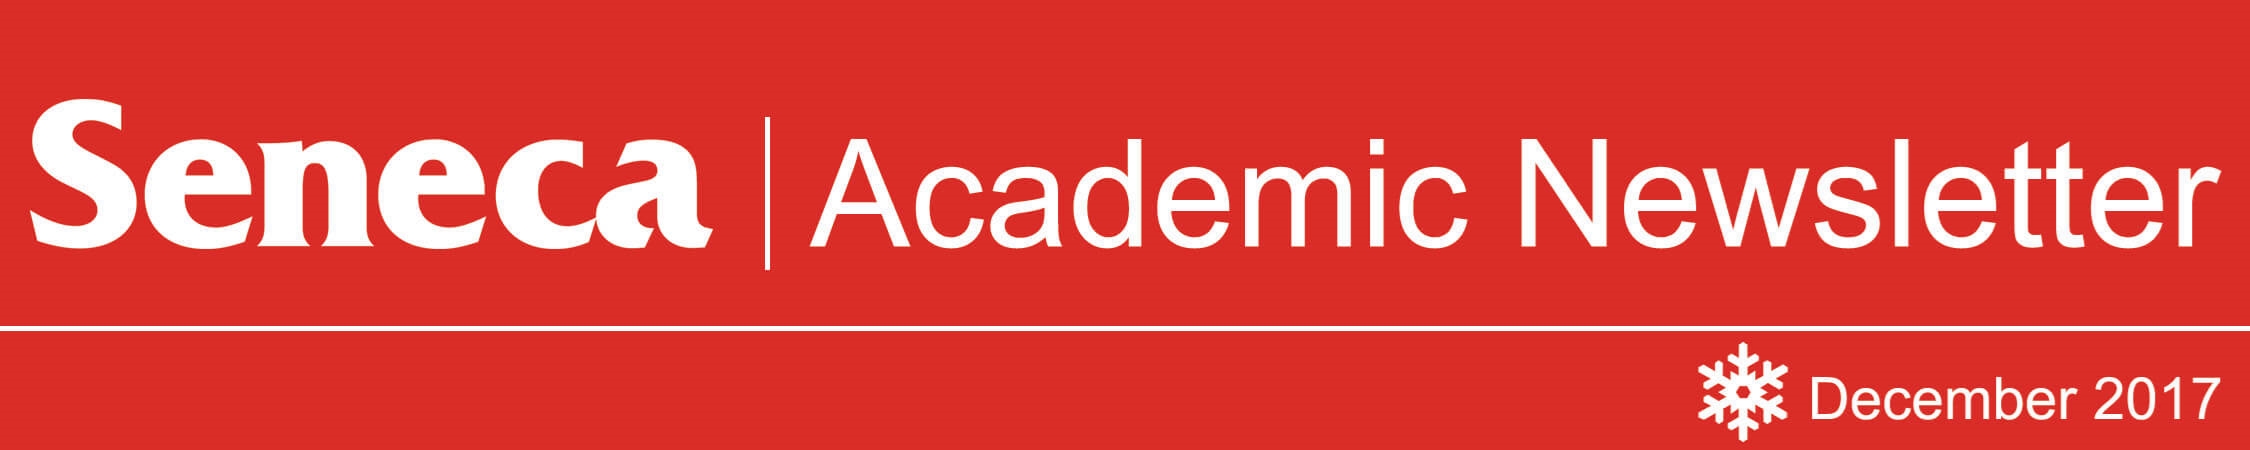 The header logo for the December 2017 issue of the Academic Newsletter